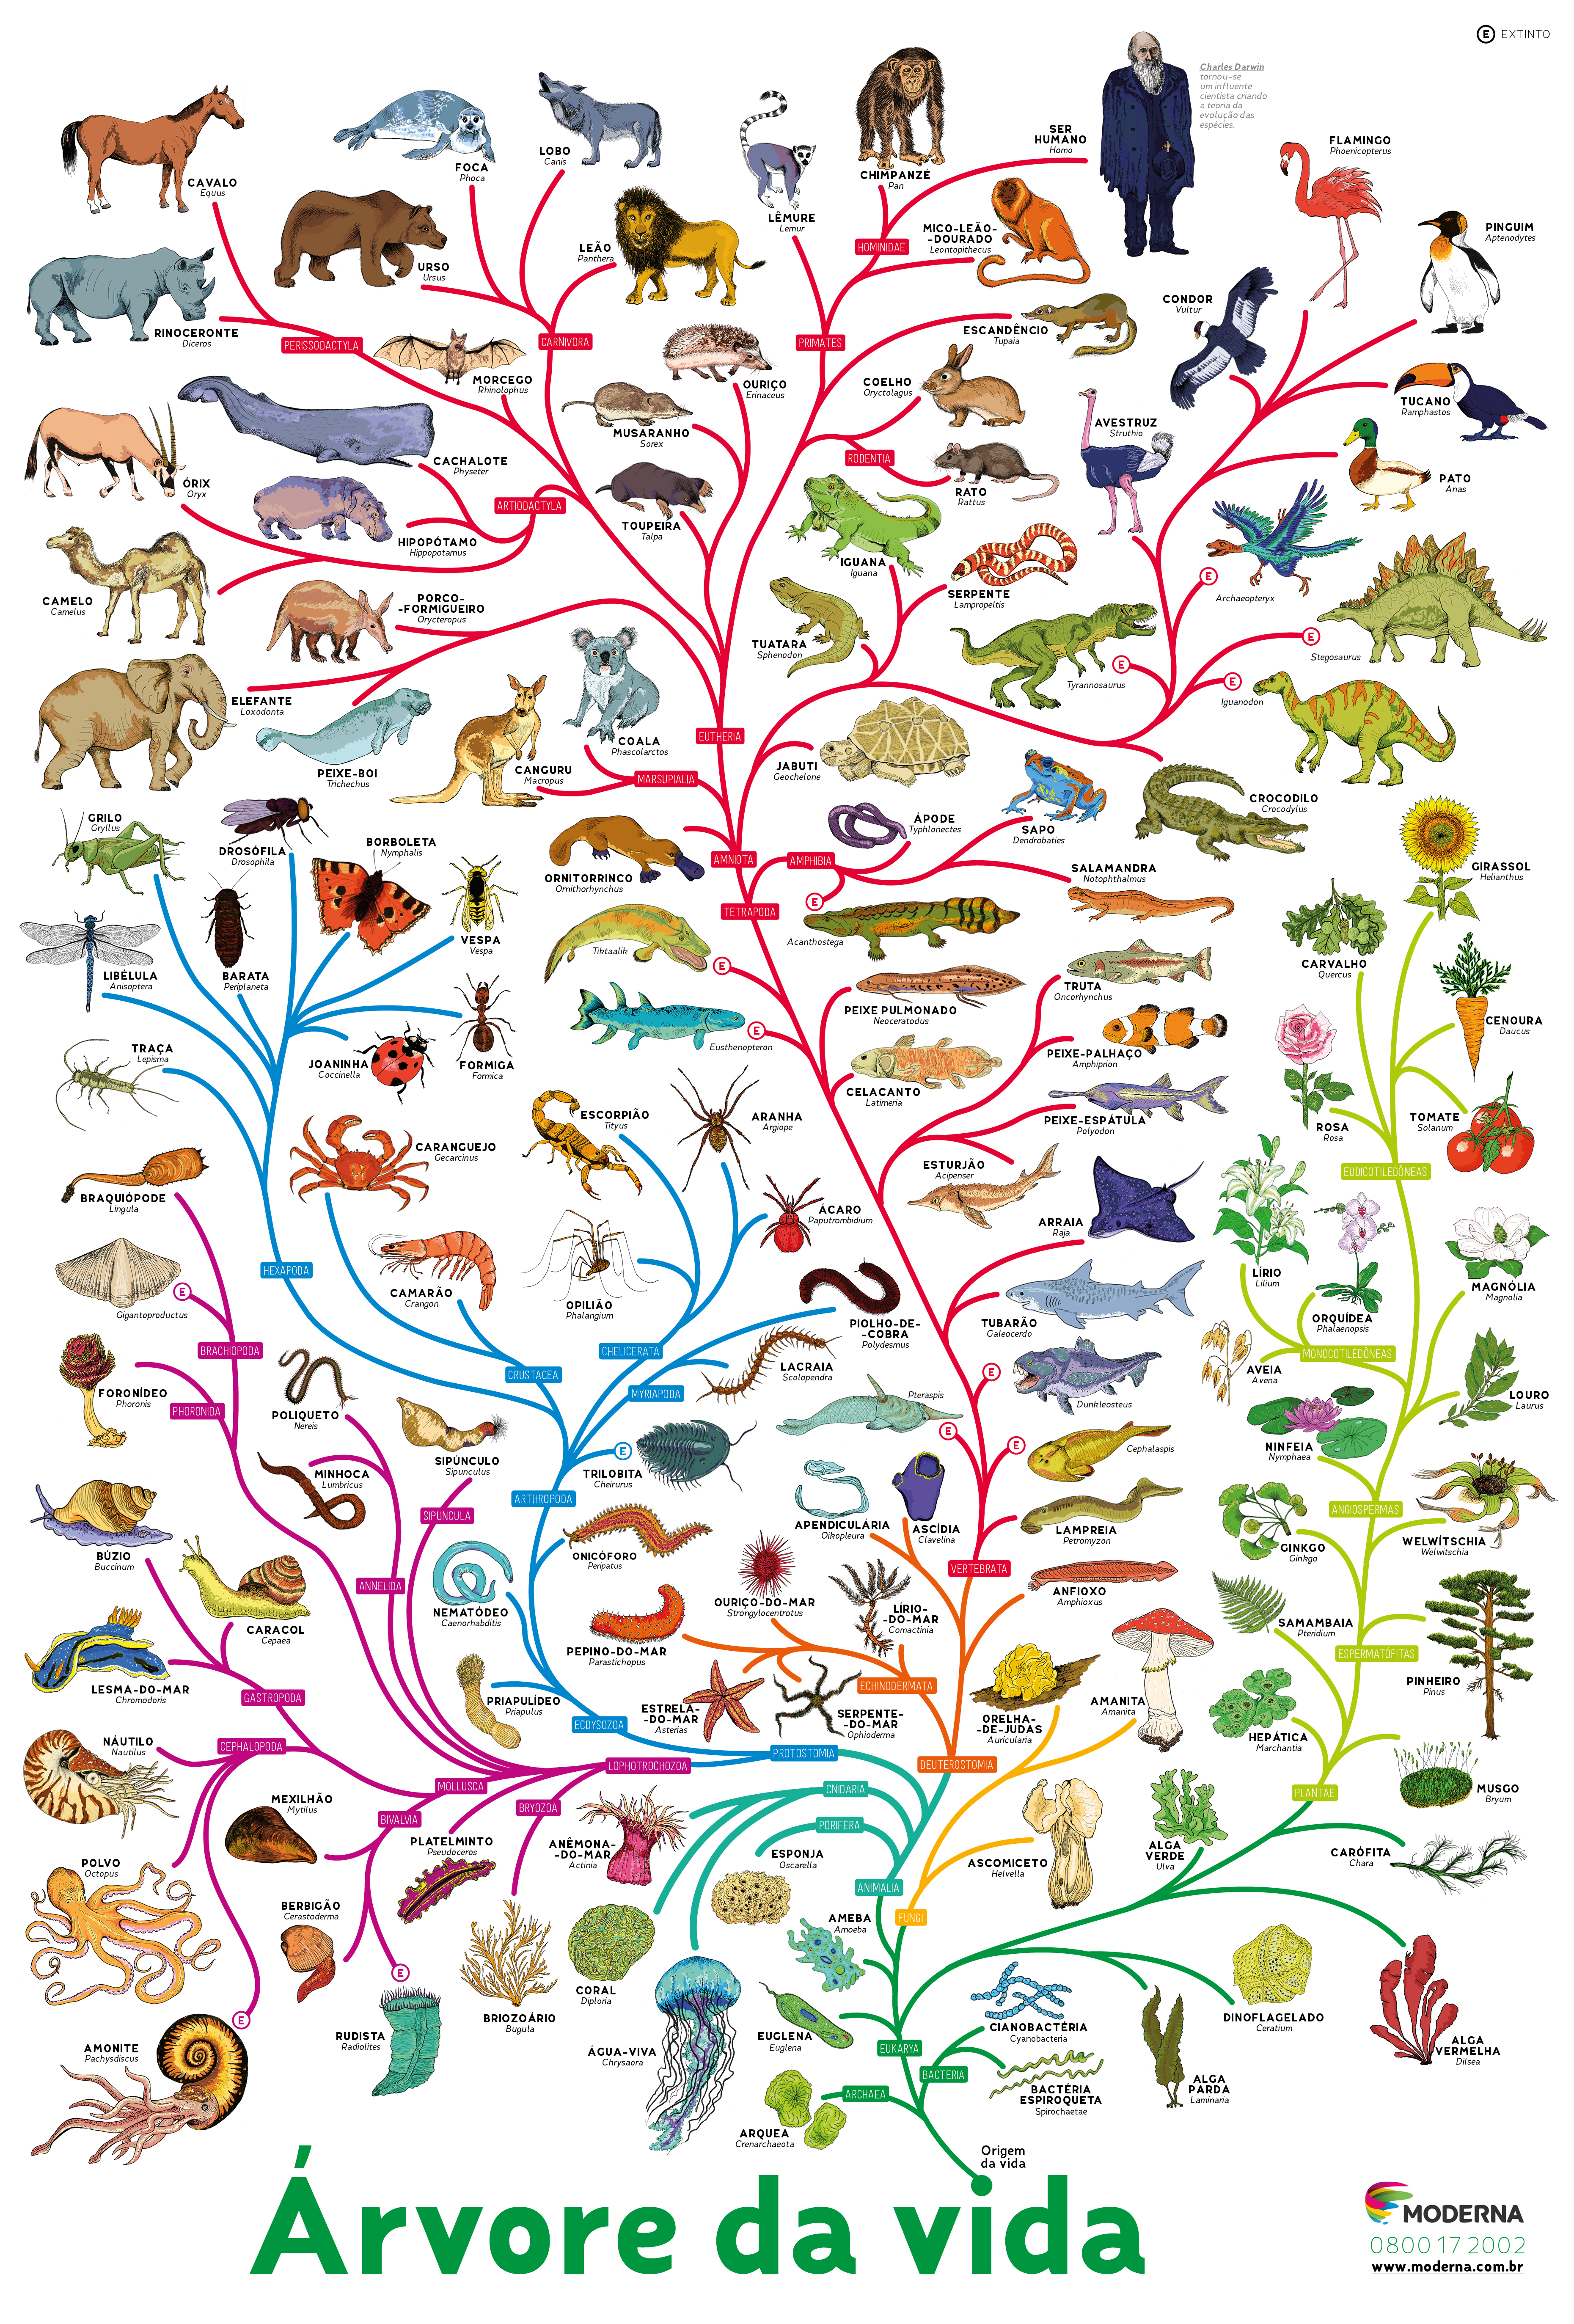 Древо живого. Эволюционное дерево жизни Чарльза Дарвина. Эволюционное Древо развития животных. Филогенетическое дерево эволюции.